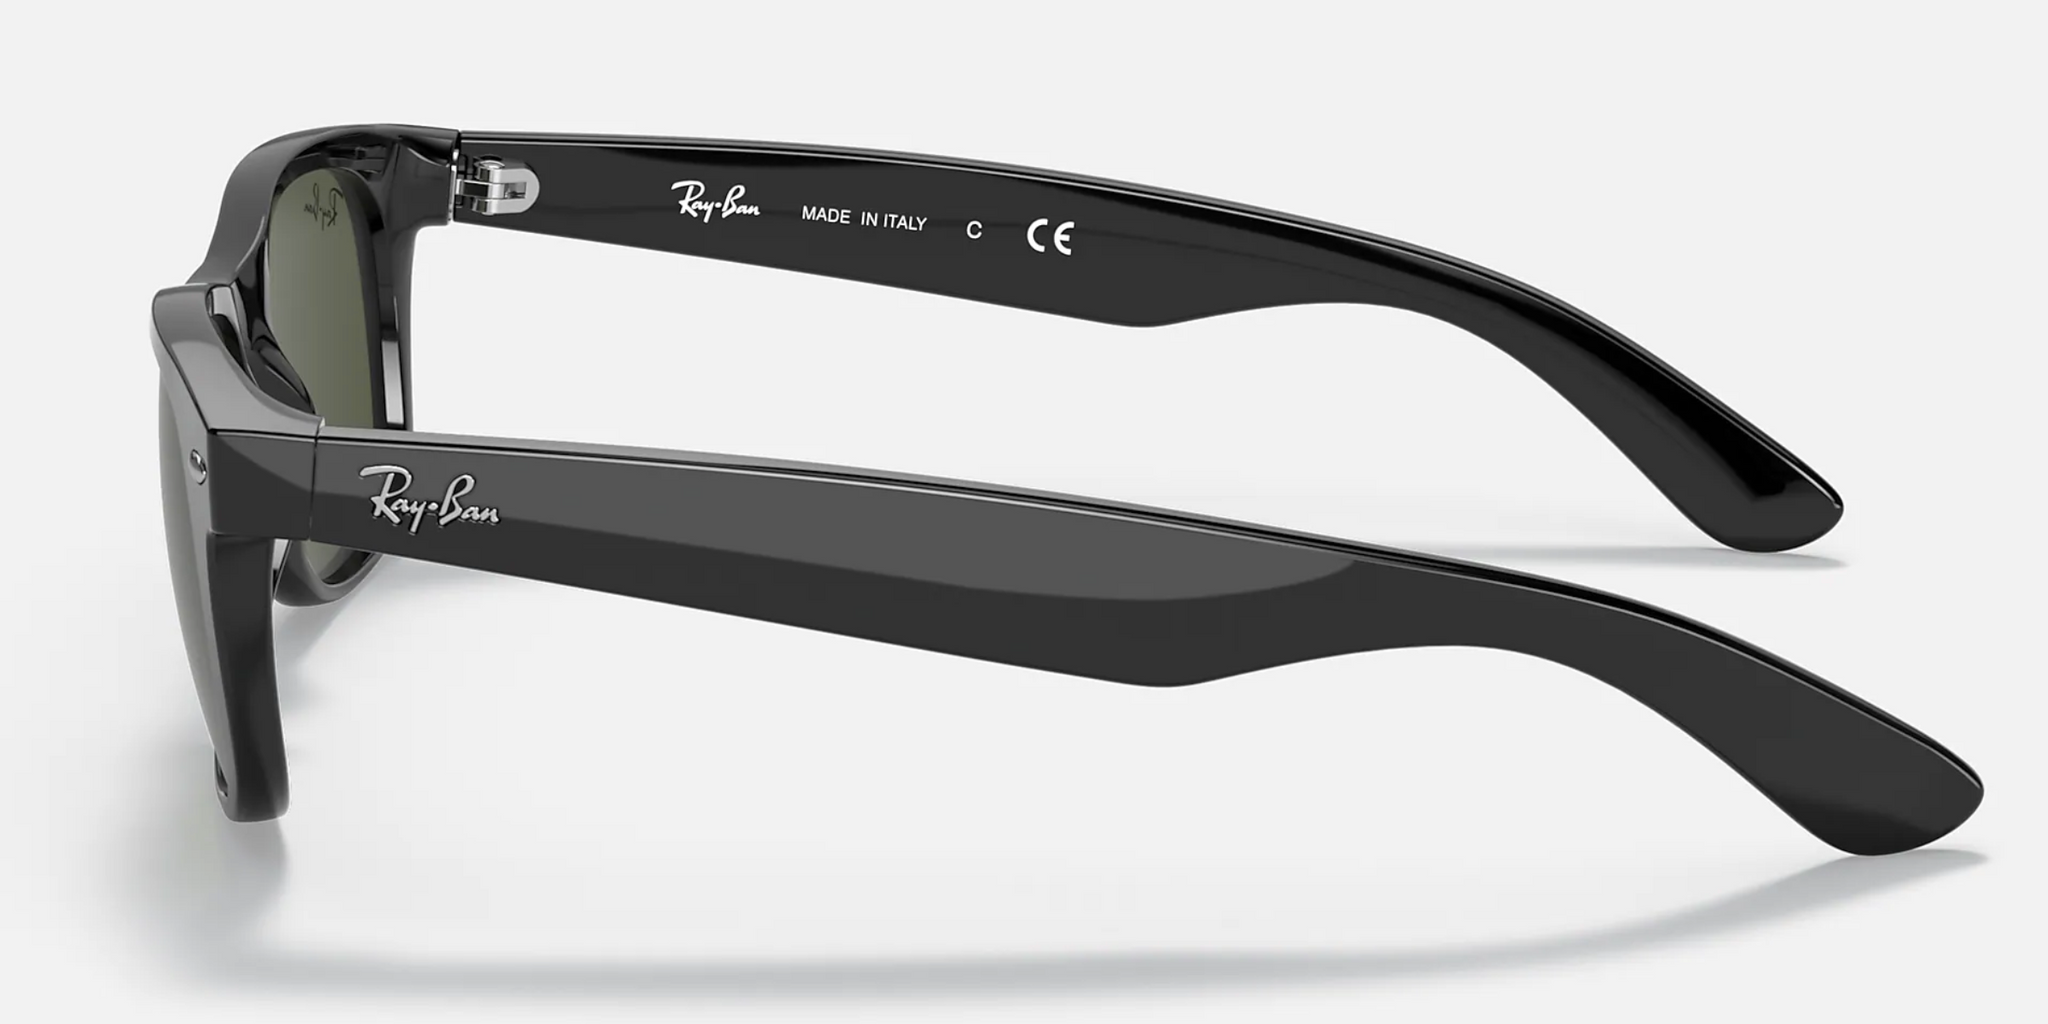 Ray-Ban New Wayfarer Black Classic Sunglasses RB2132 - Flight Sunglasses